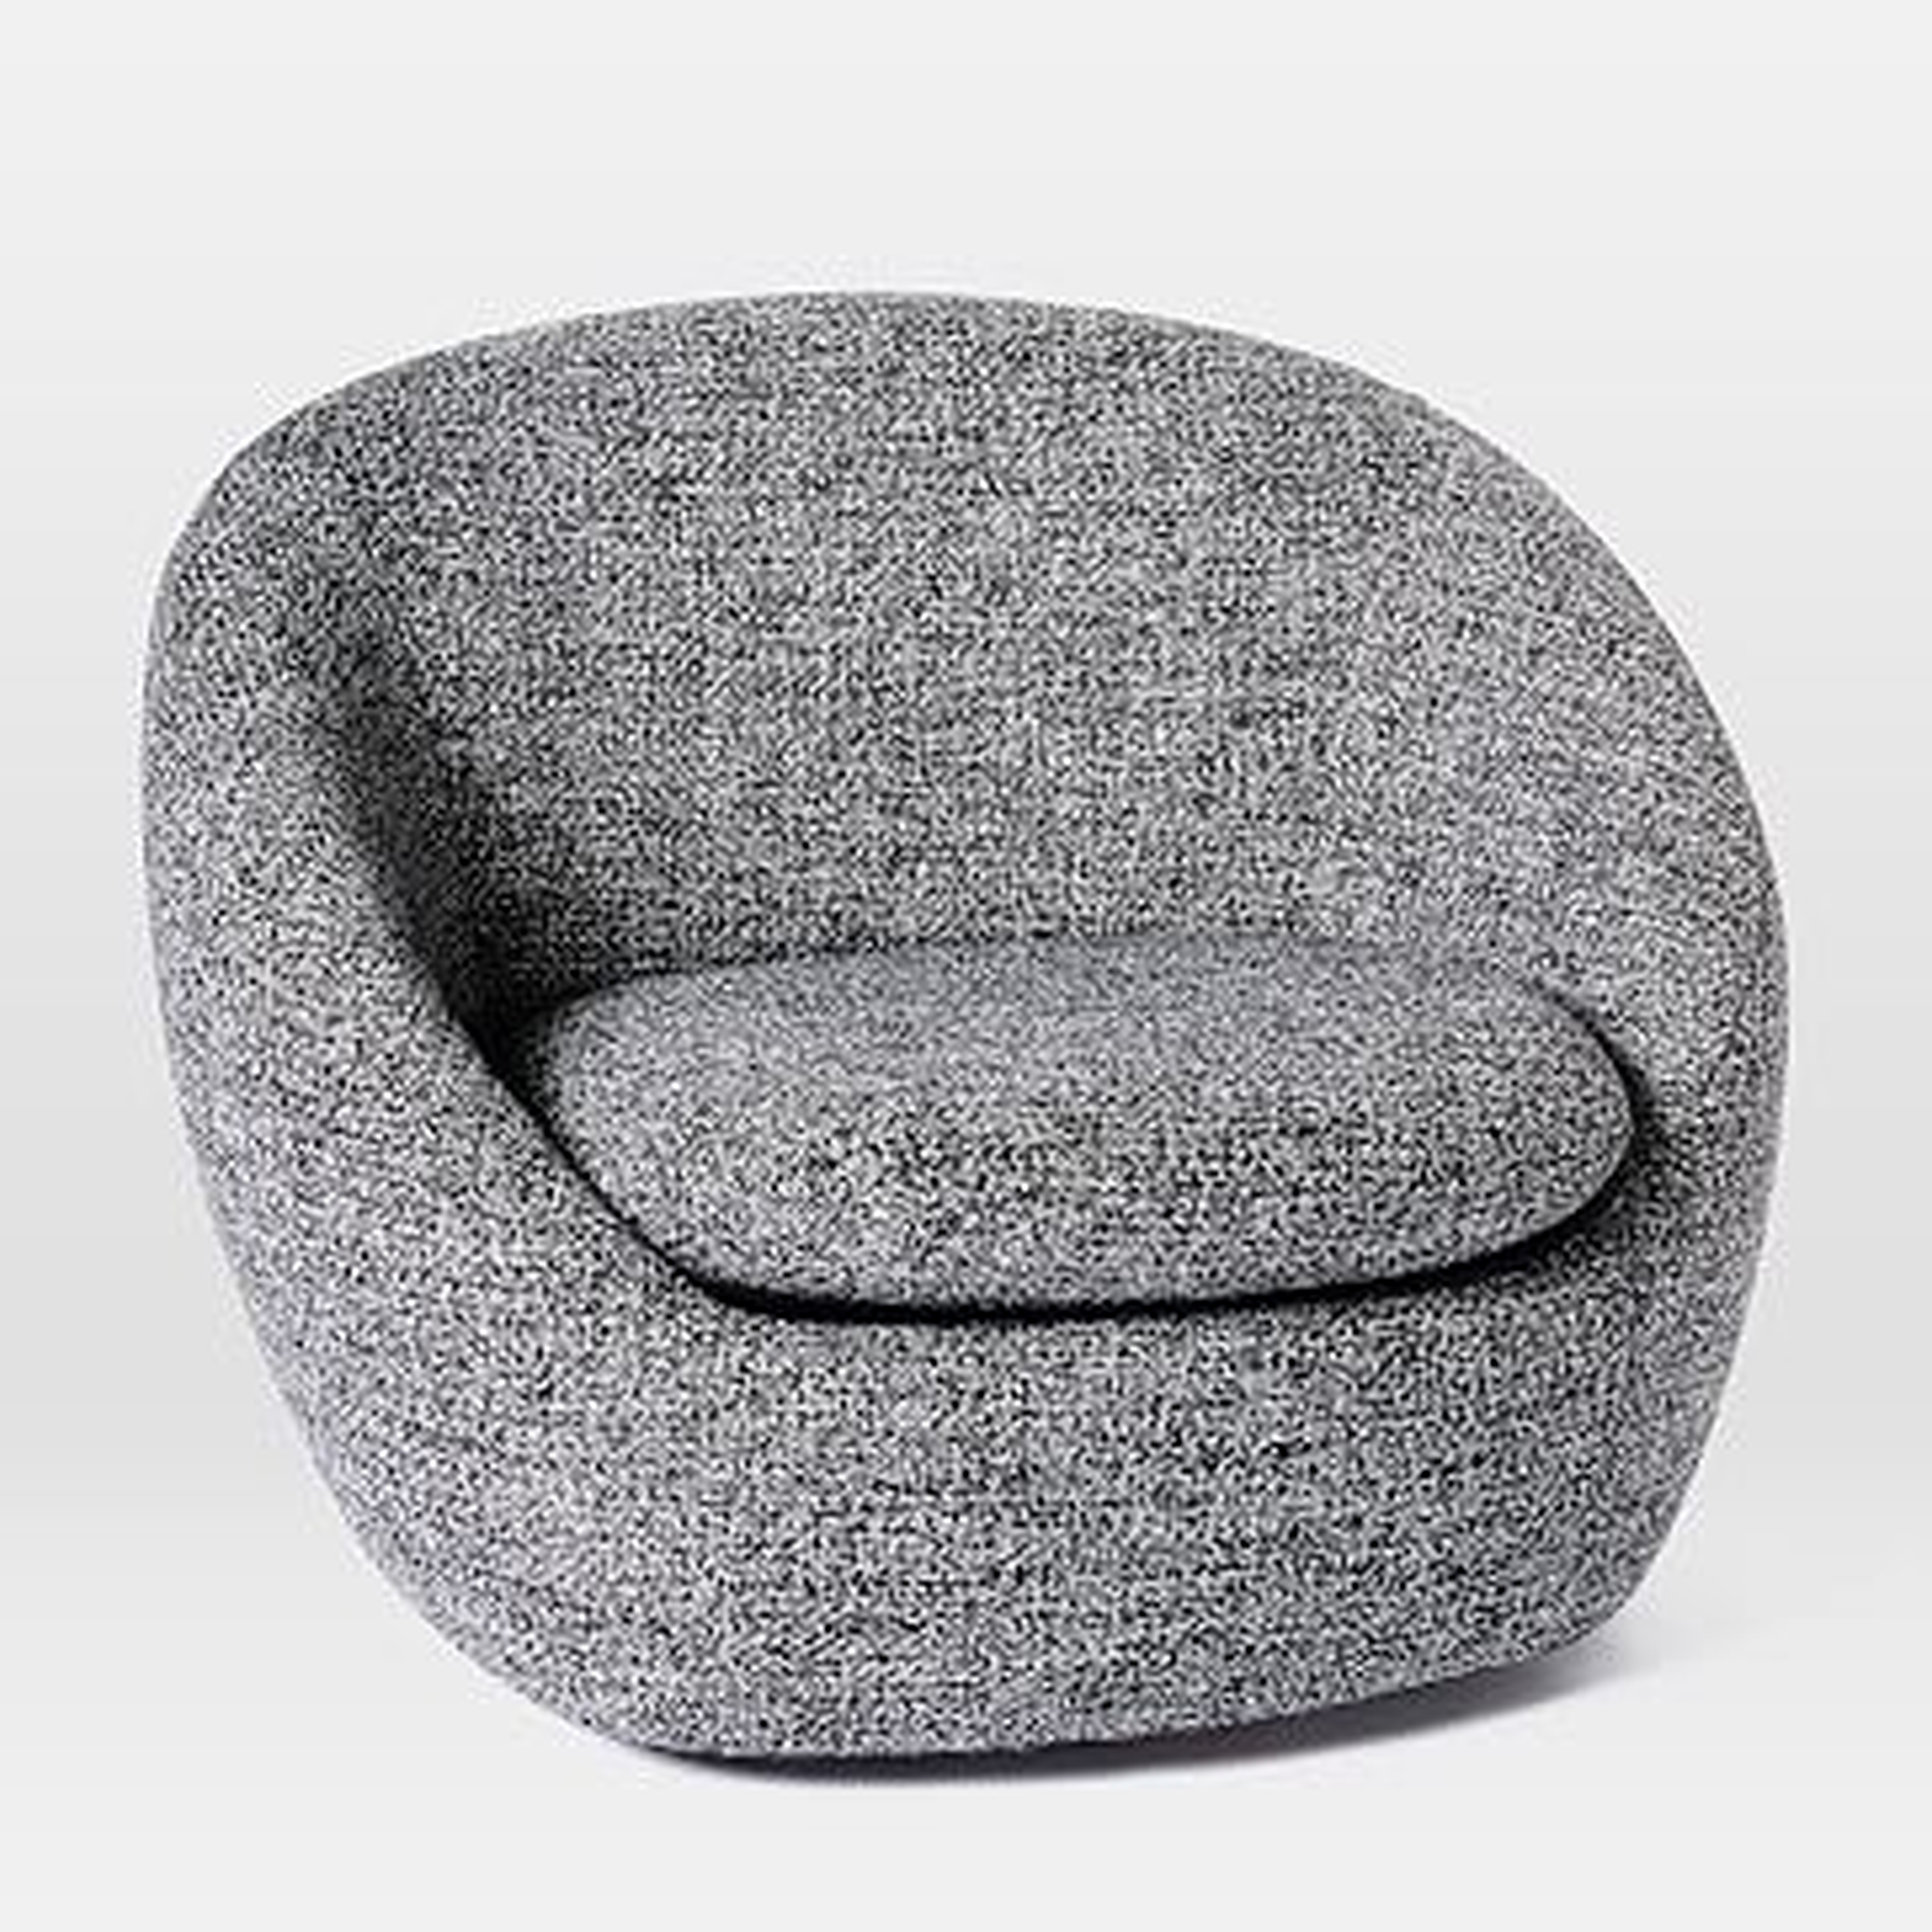 Cozy Swivel Chair, Chunky Melange, Charcoal, Set of 2 - West Elm